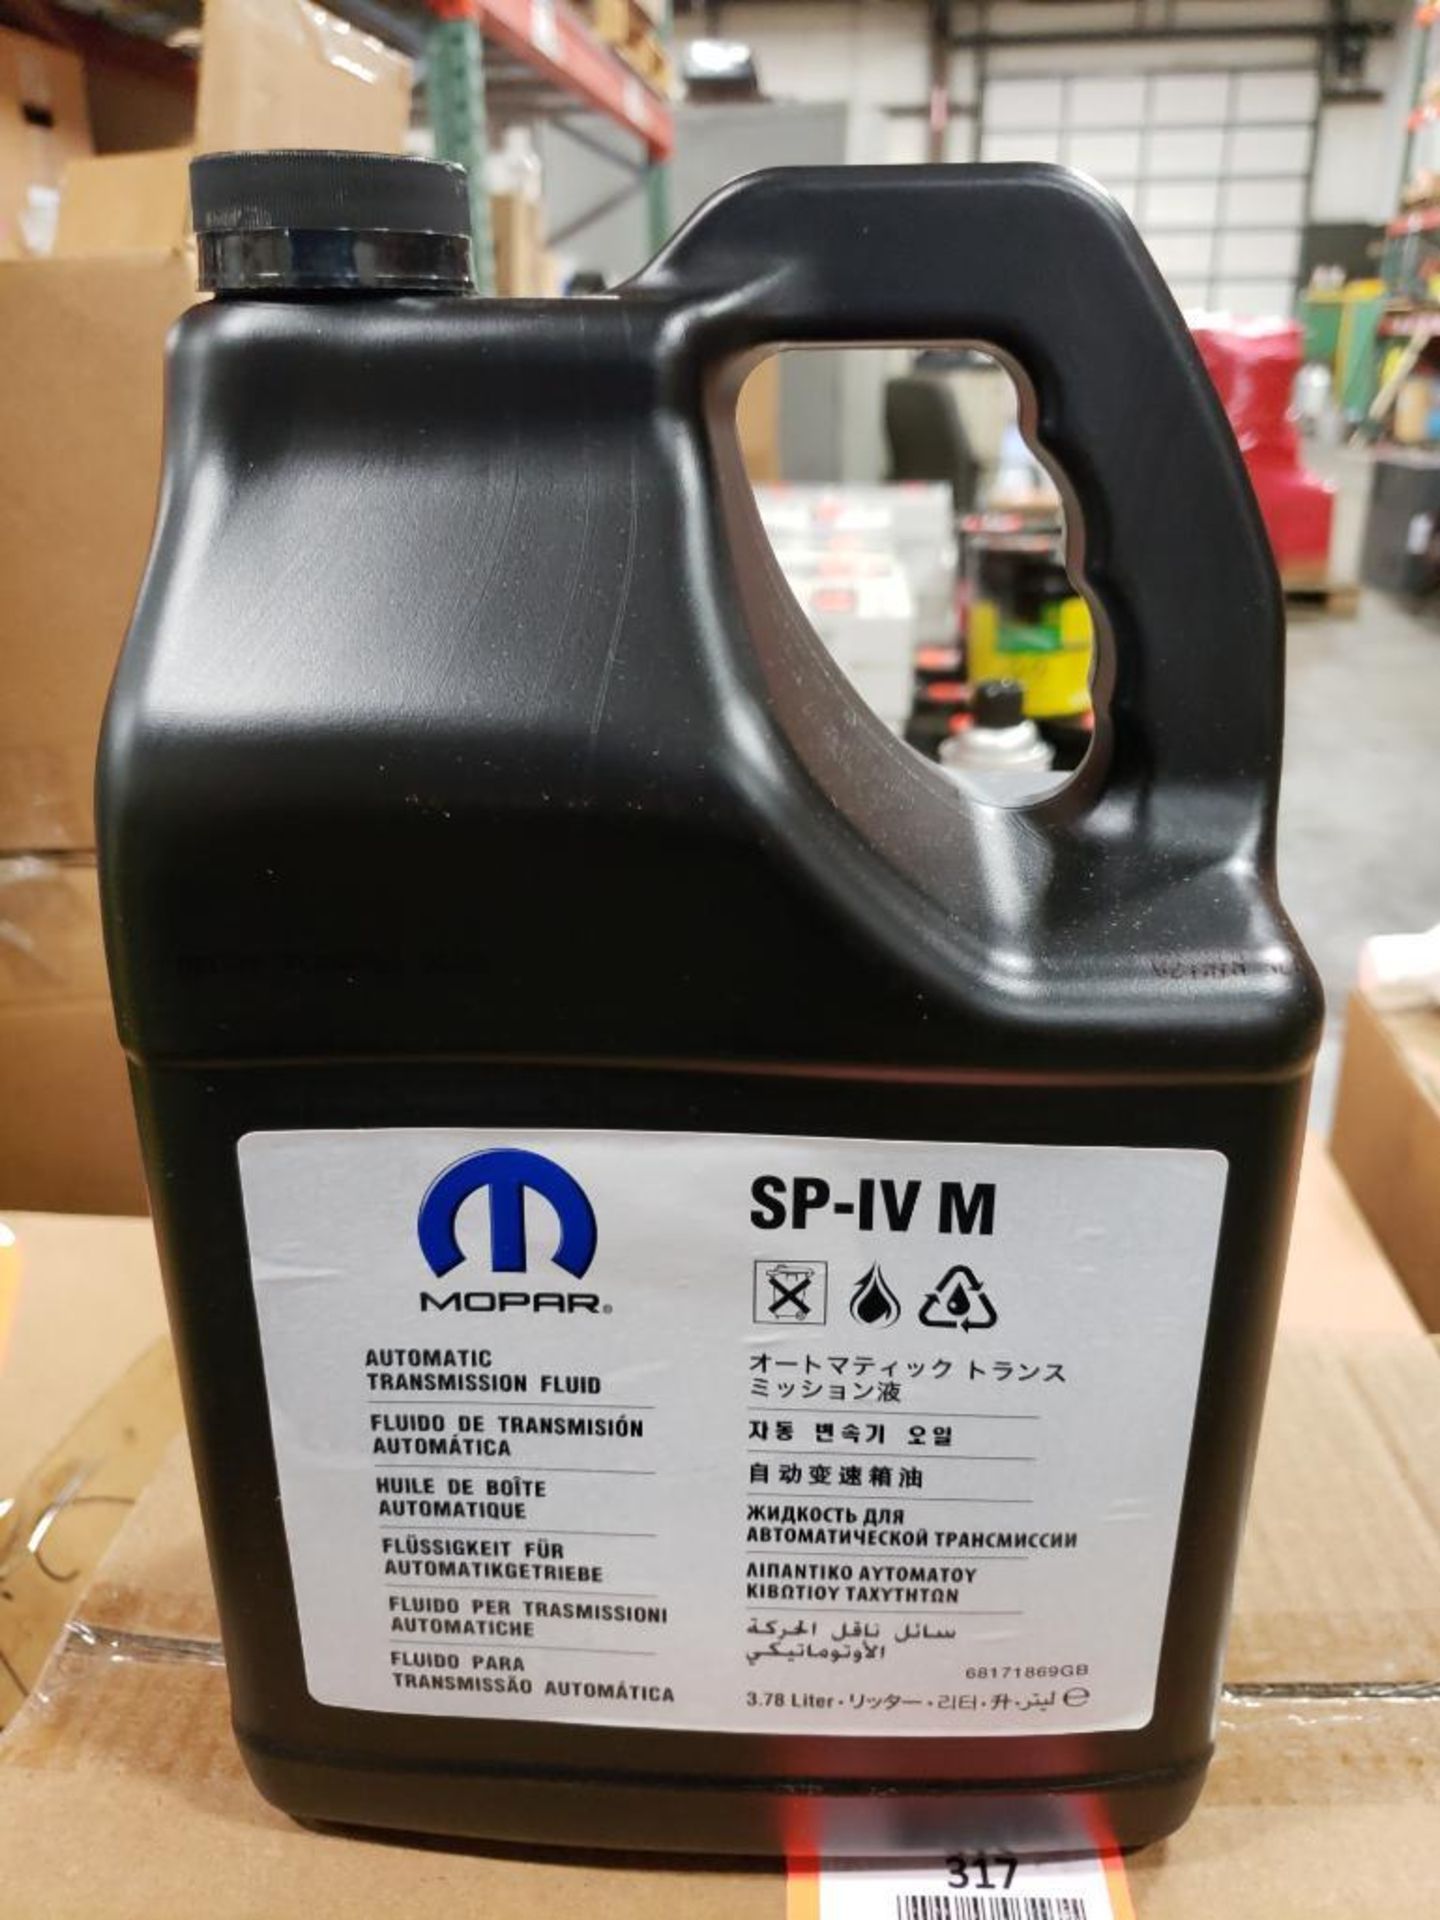 Qty 8 - MOPAR SP-IV M automatic transmission fluid bottle. New in box. (2 Boxes of 4 Bottles each). - Image 3 of 4